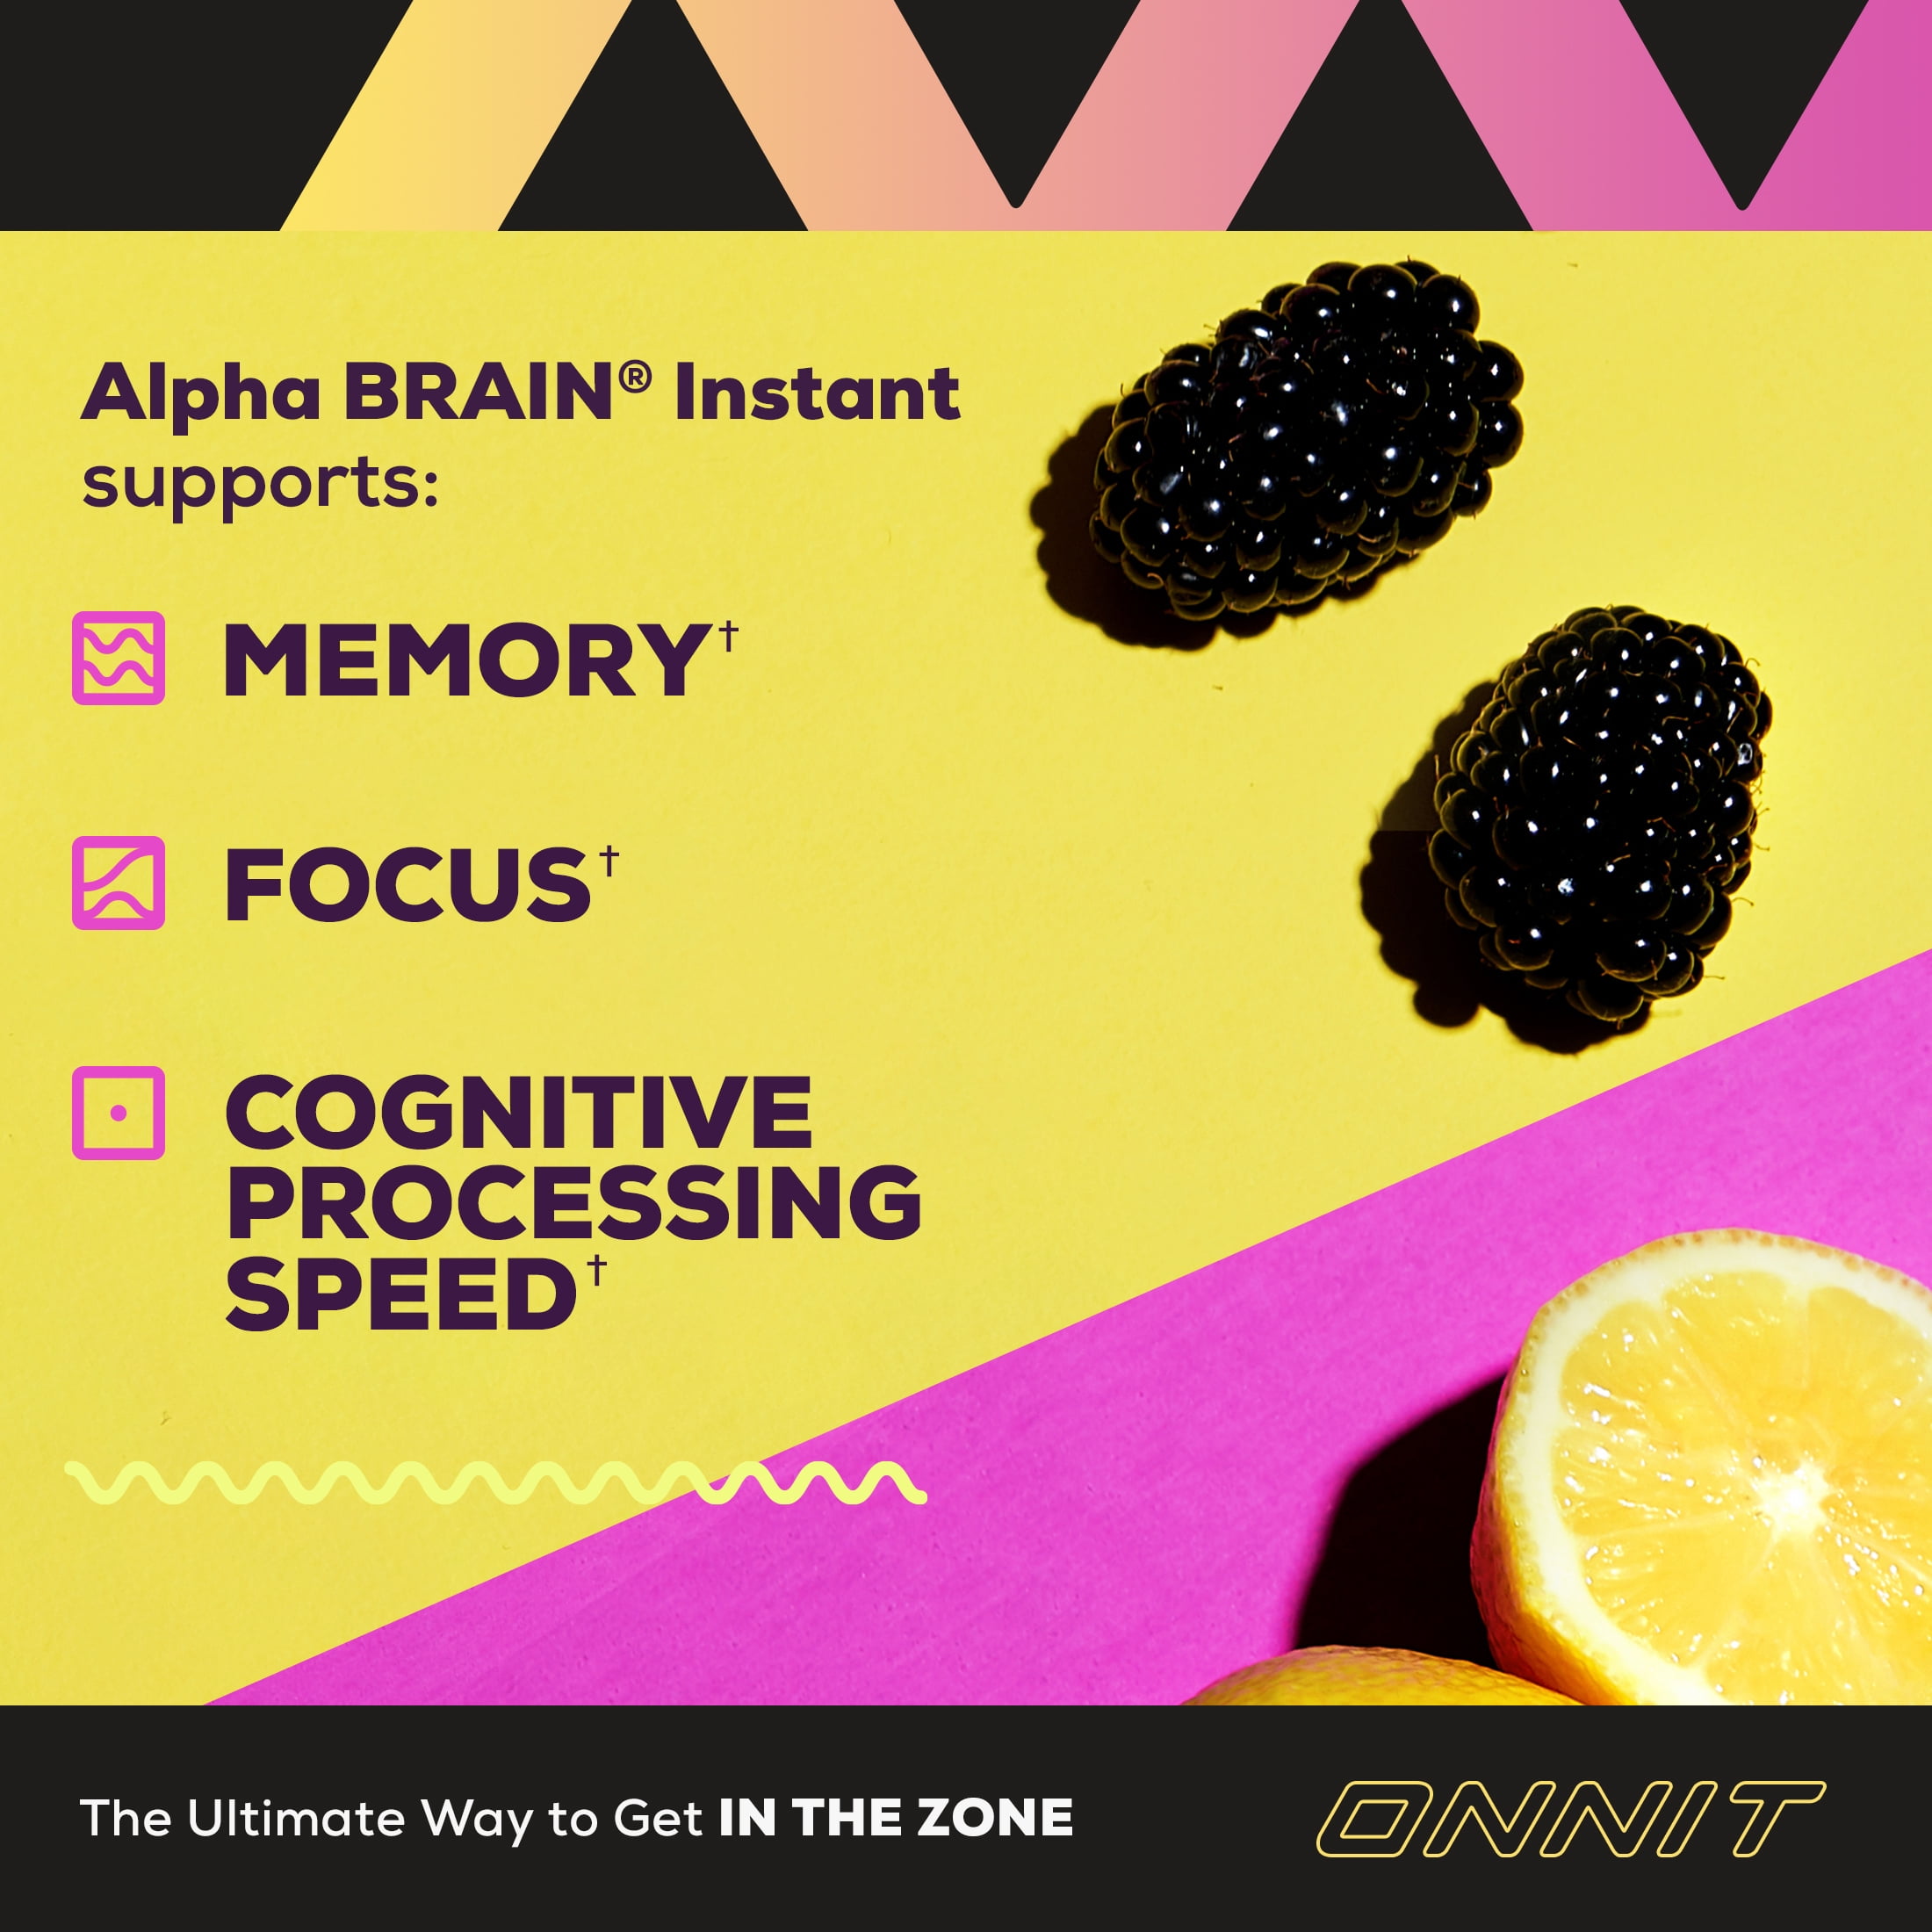 Alpha Brain Instant, Memory & Focus, Peach, 30 Packets, 0.13 oz